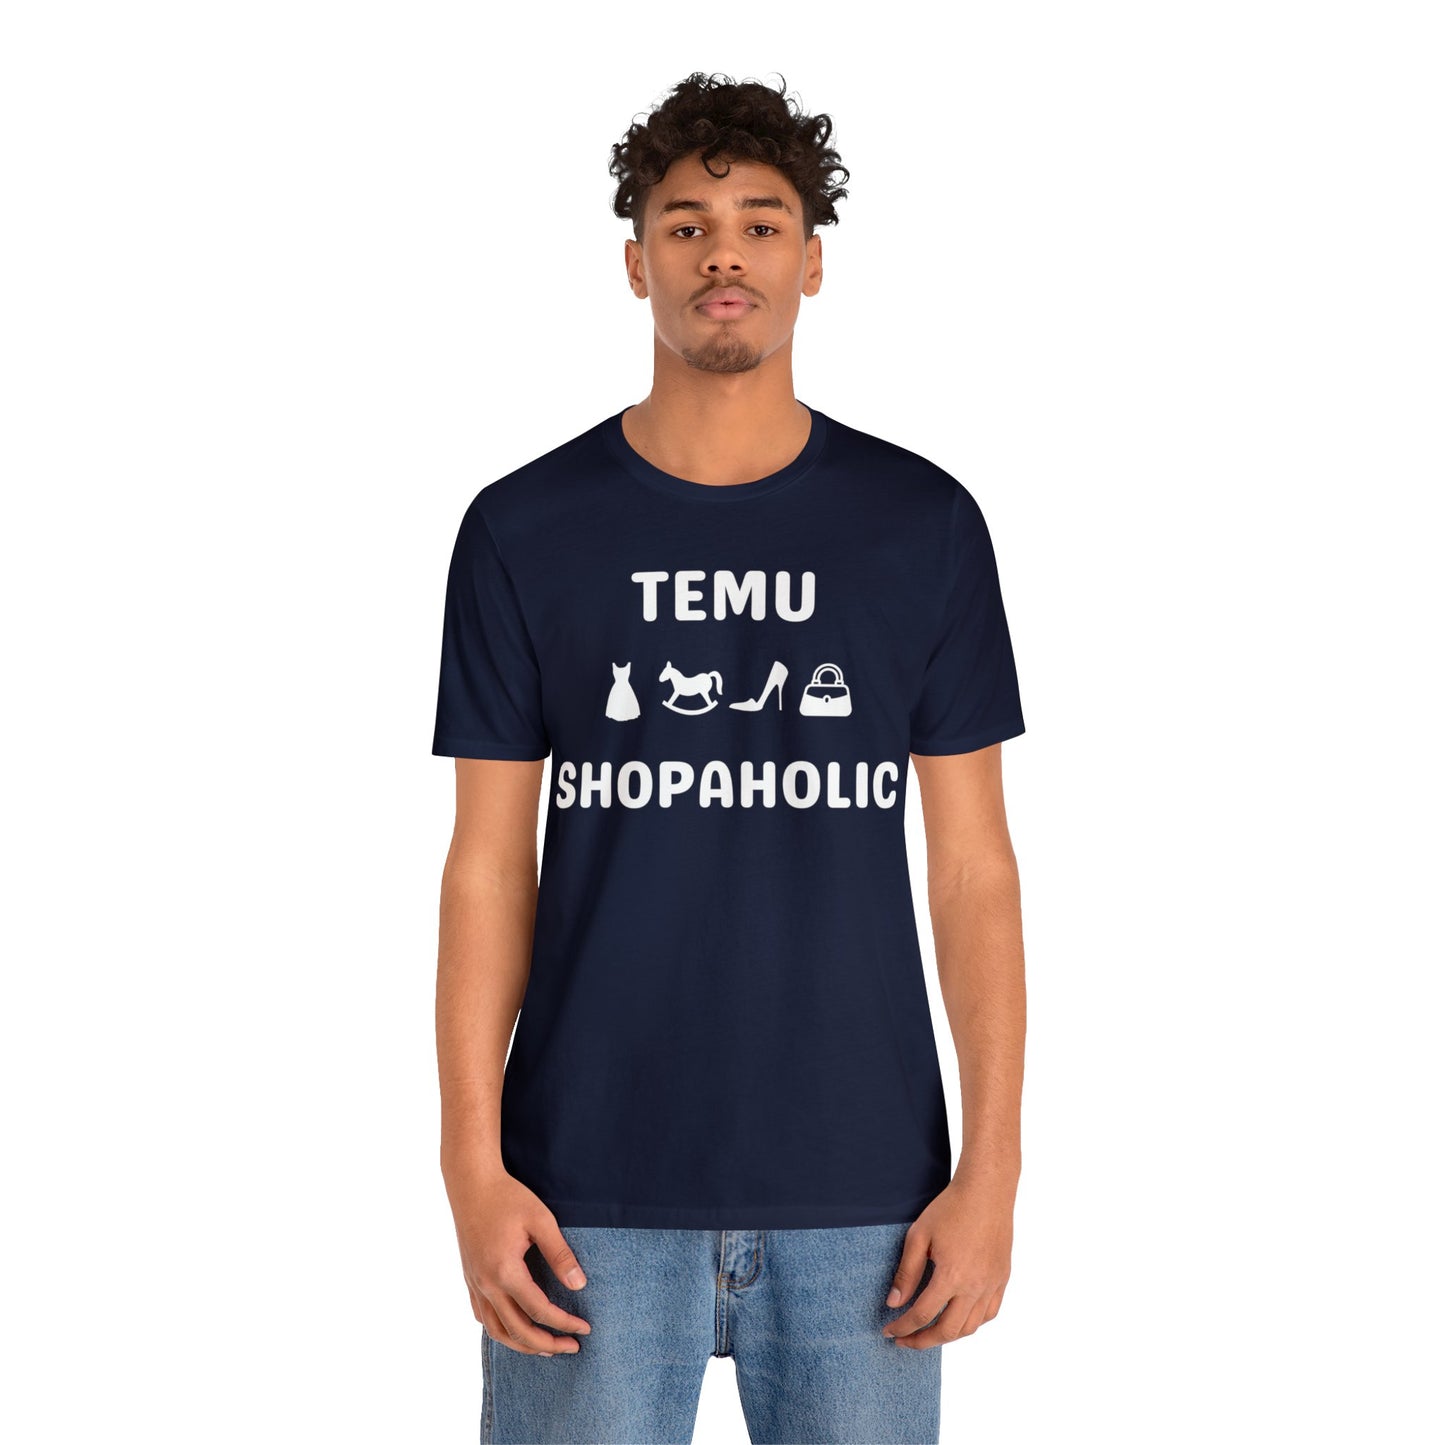 TEMU Shopaholic - Unisex Jersey Short Sleeve Tee